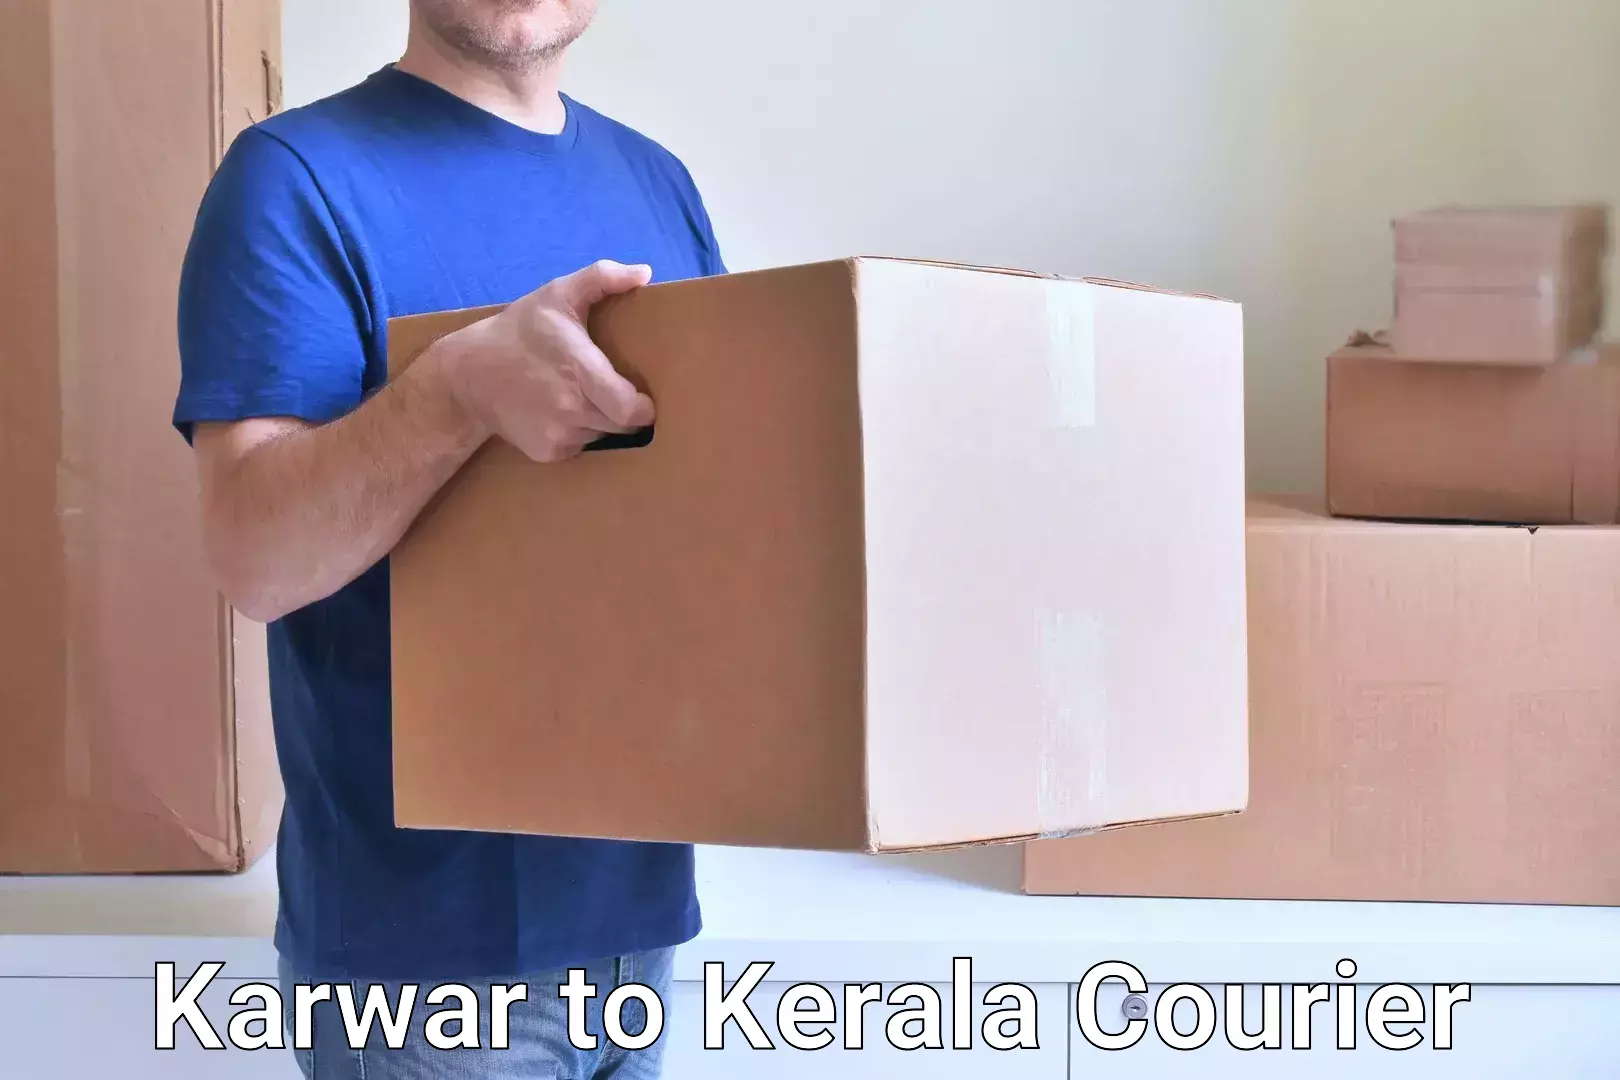 Next-day delivery options Karwar to Thrissur